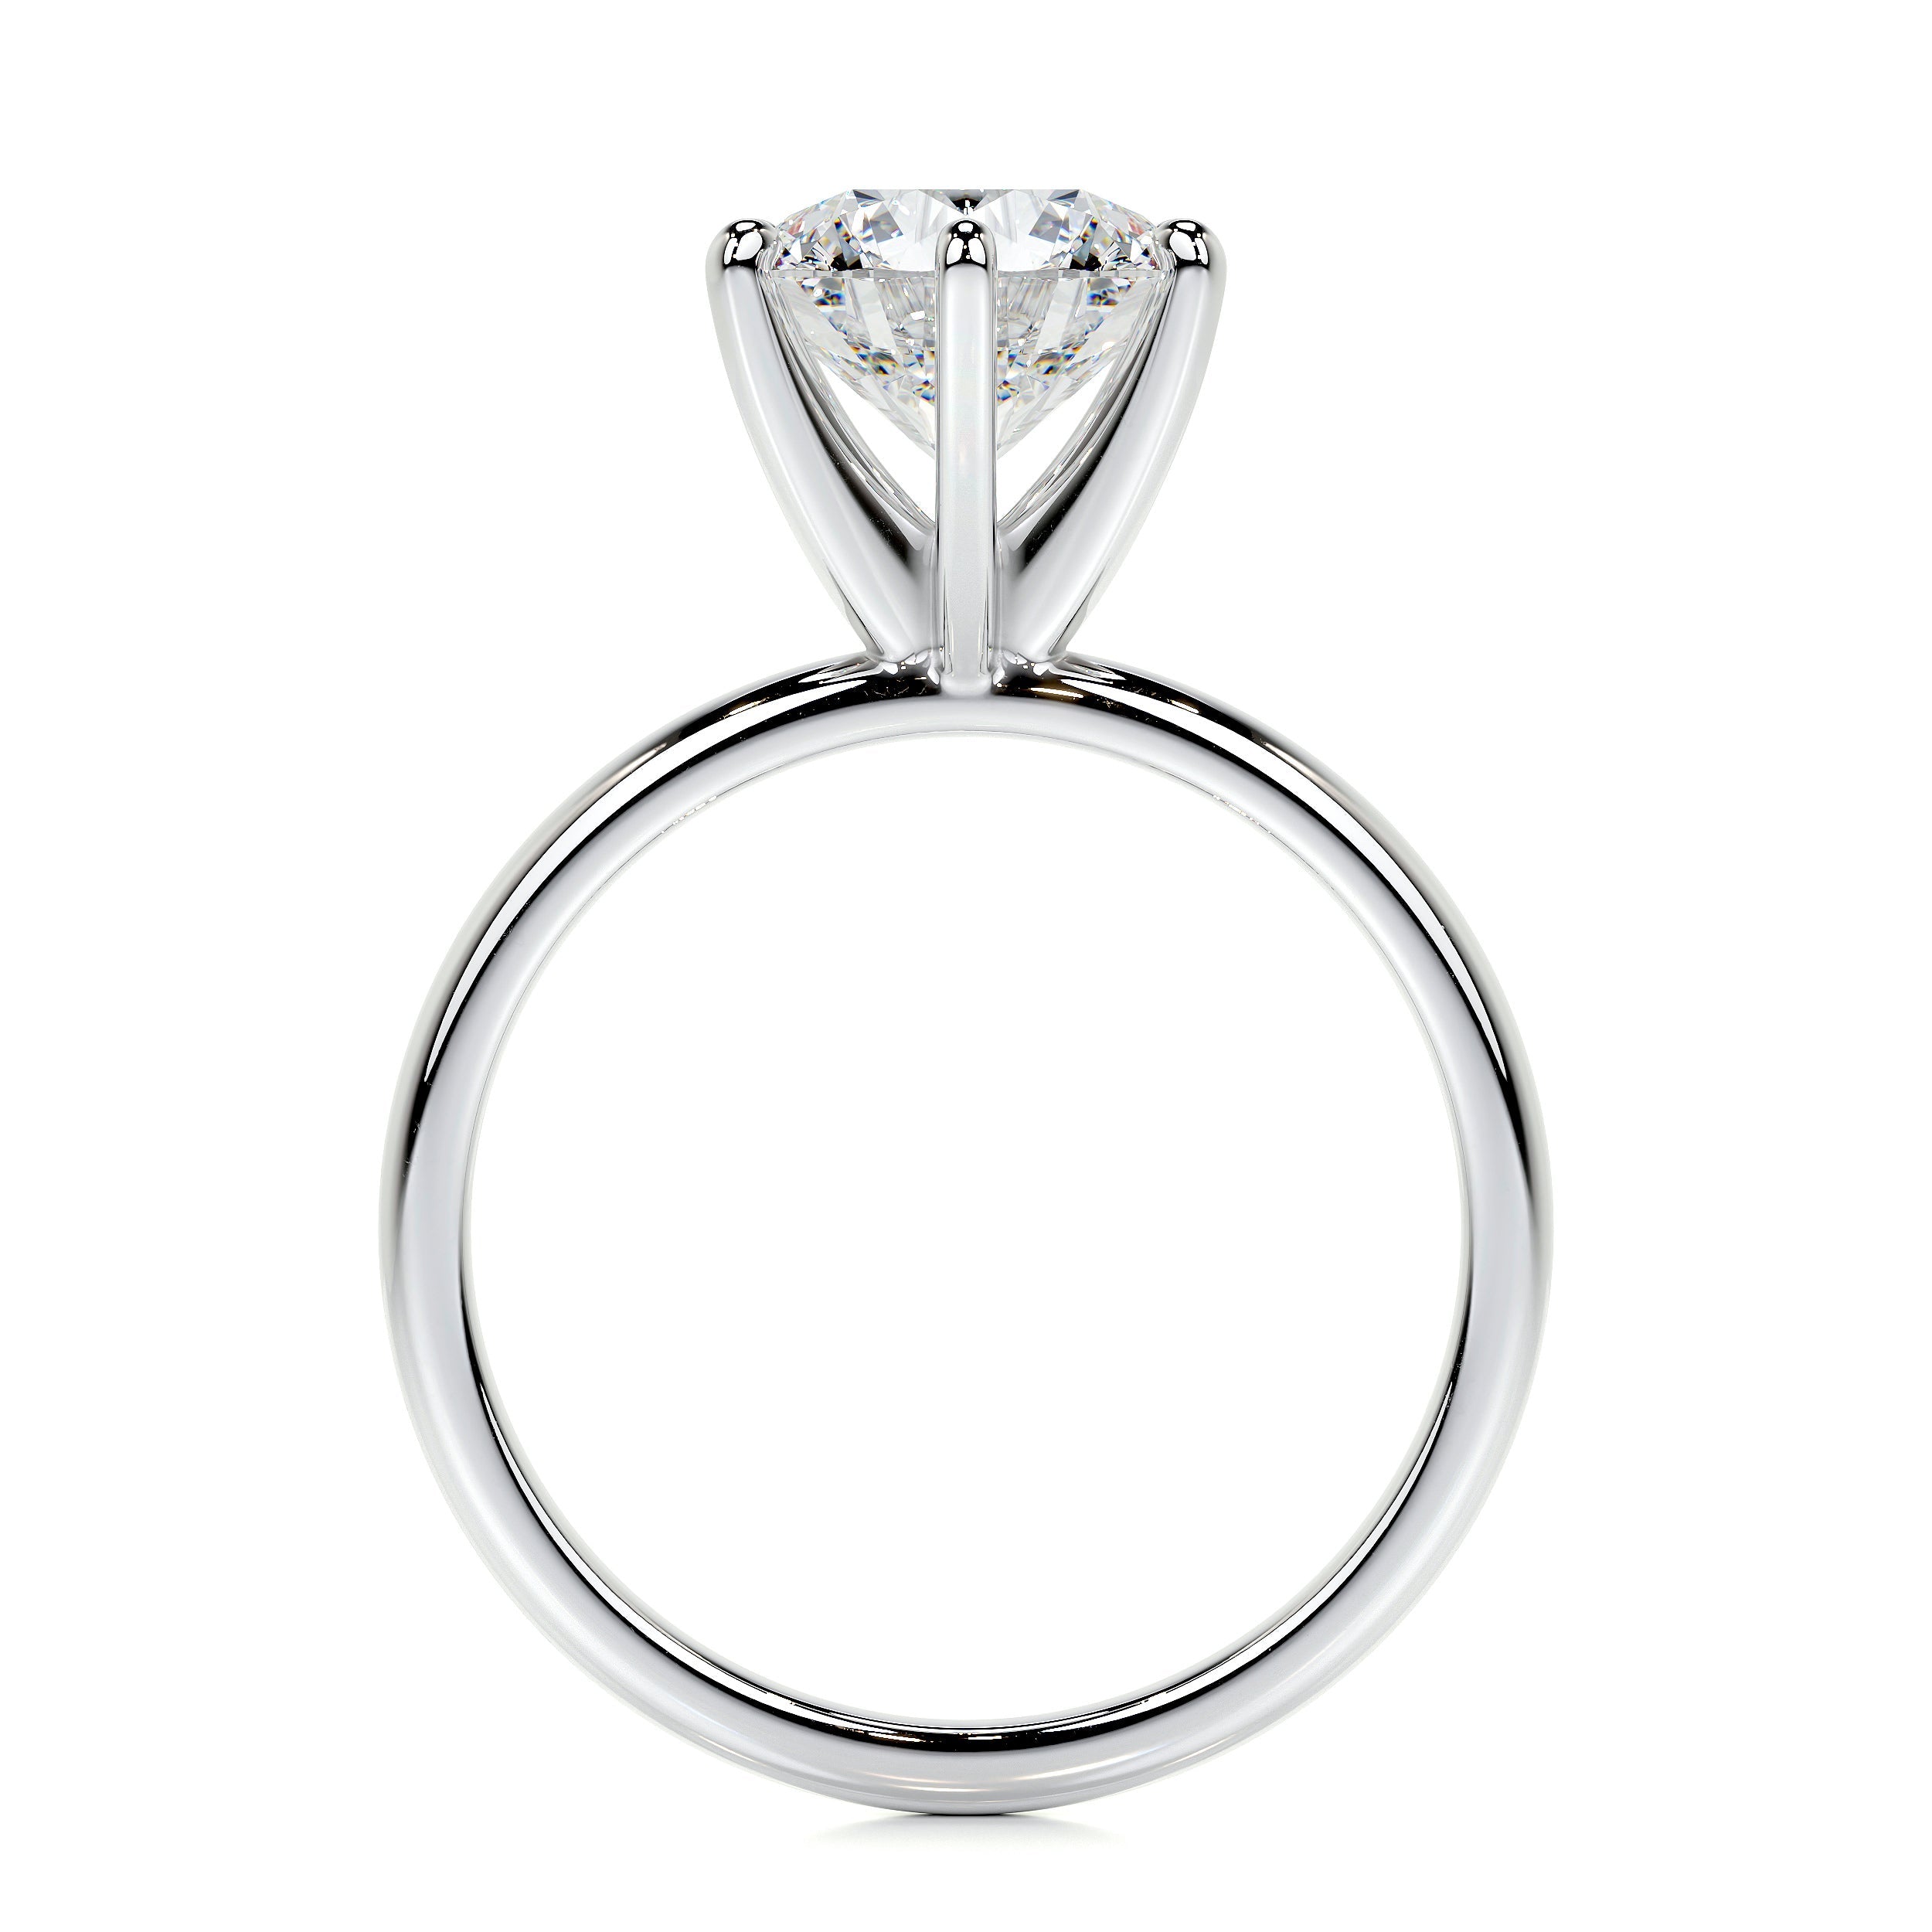 Jessica Lab Grown Diamond Ring   (2 Carat) -Platinum